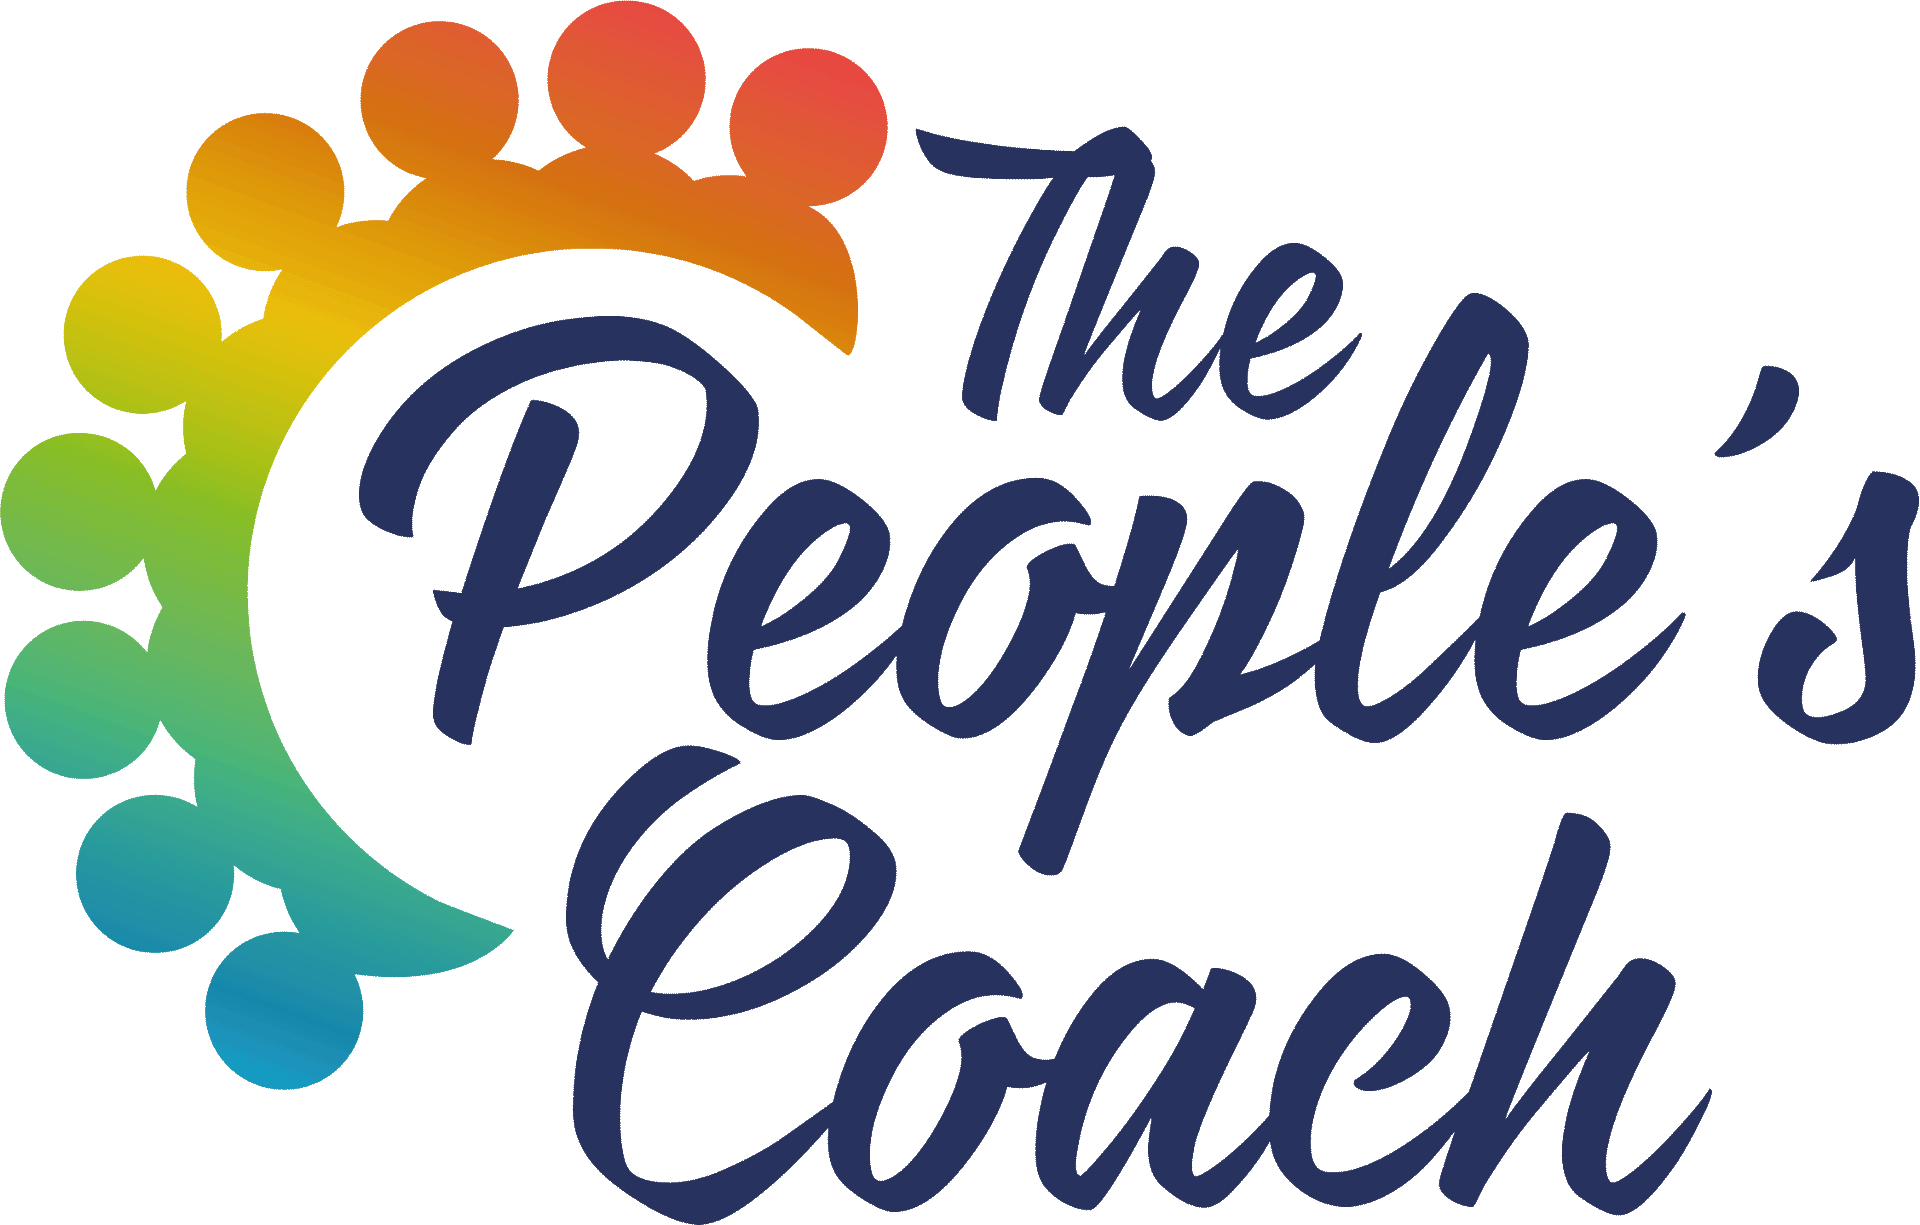 The People's Coach Ltd